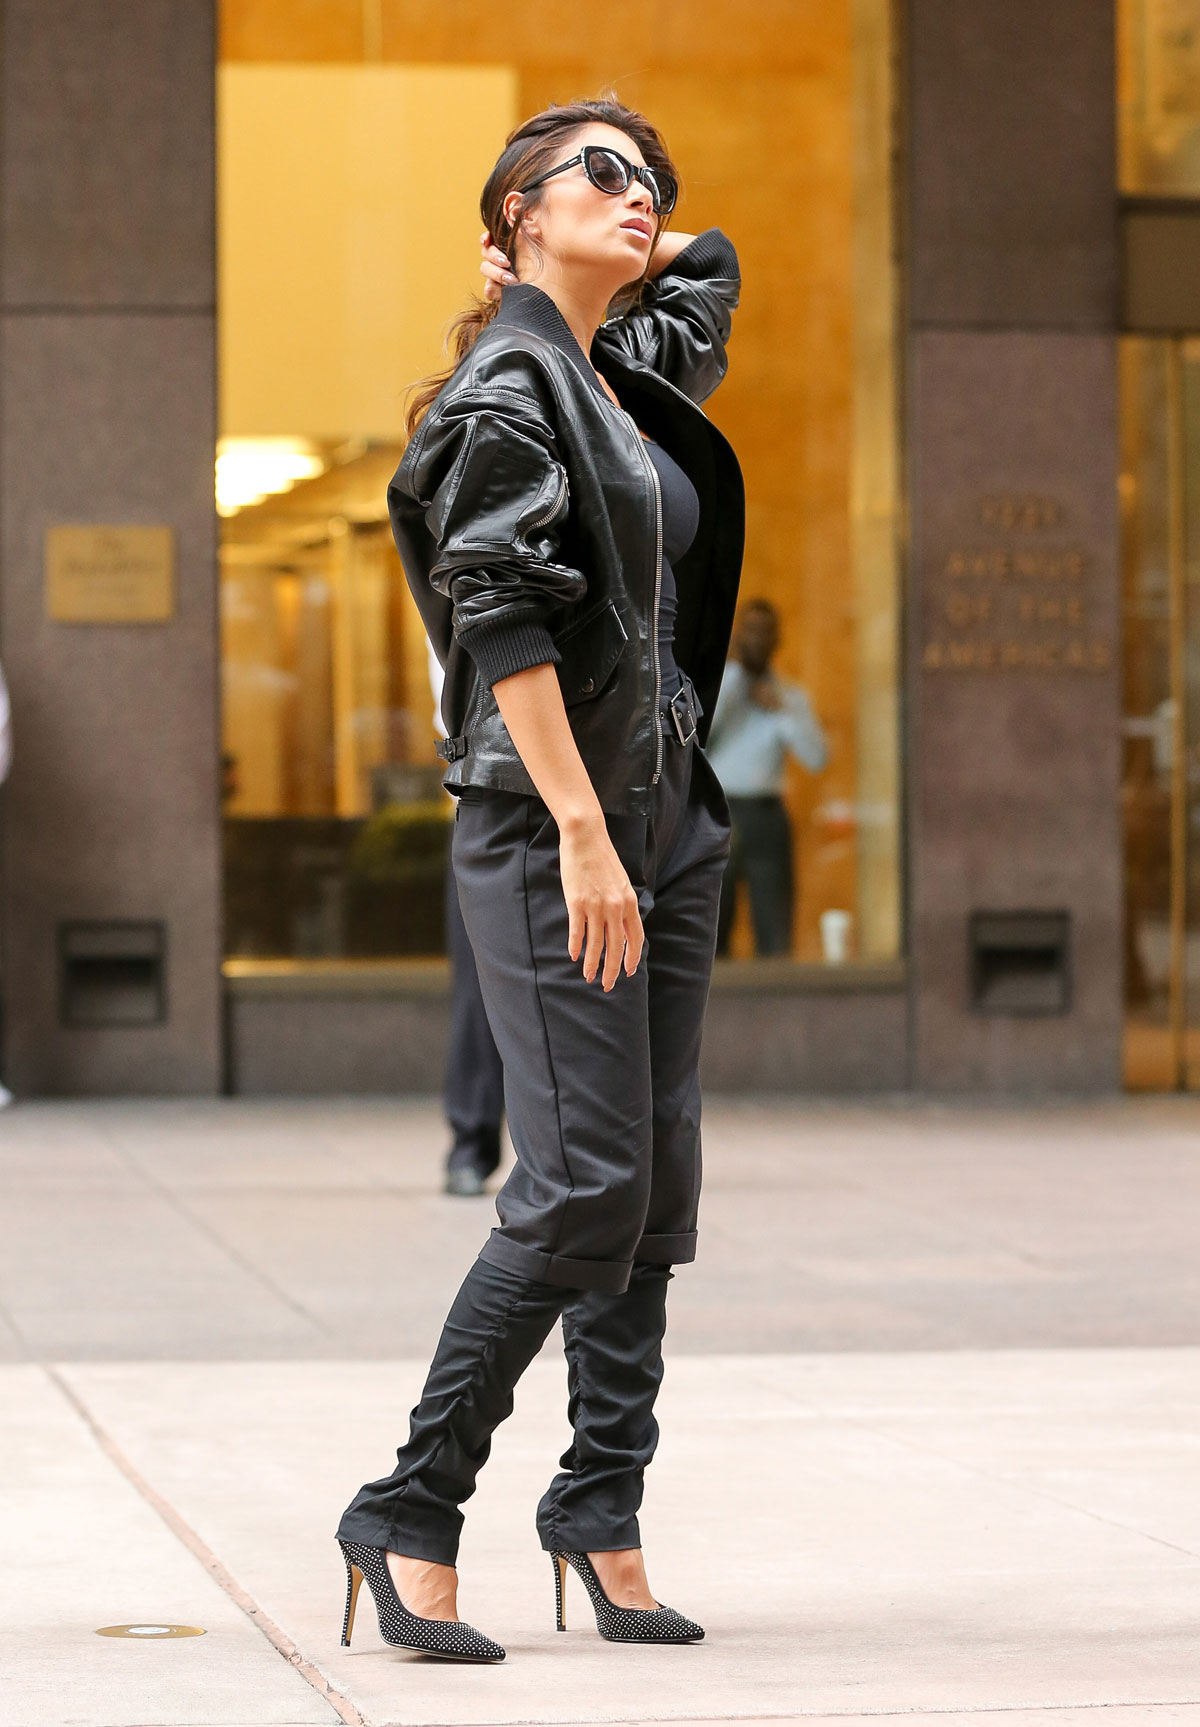 Nicole Scherzinger was spotted leaving SiriusXM Radio New York